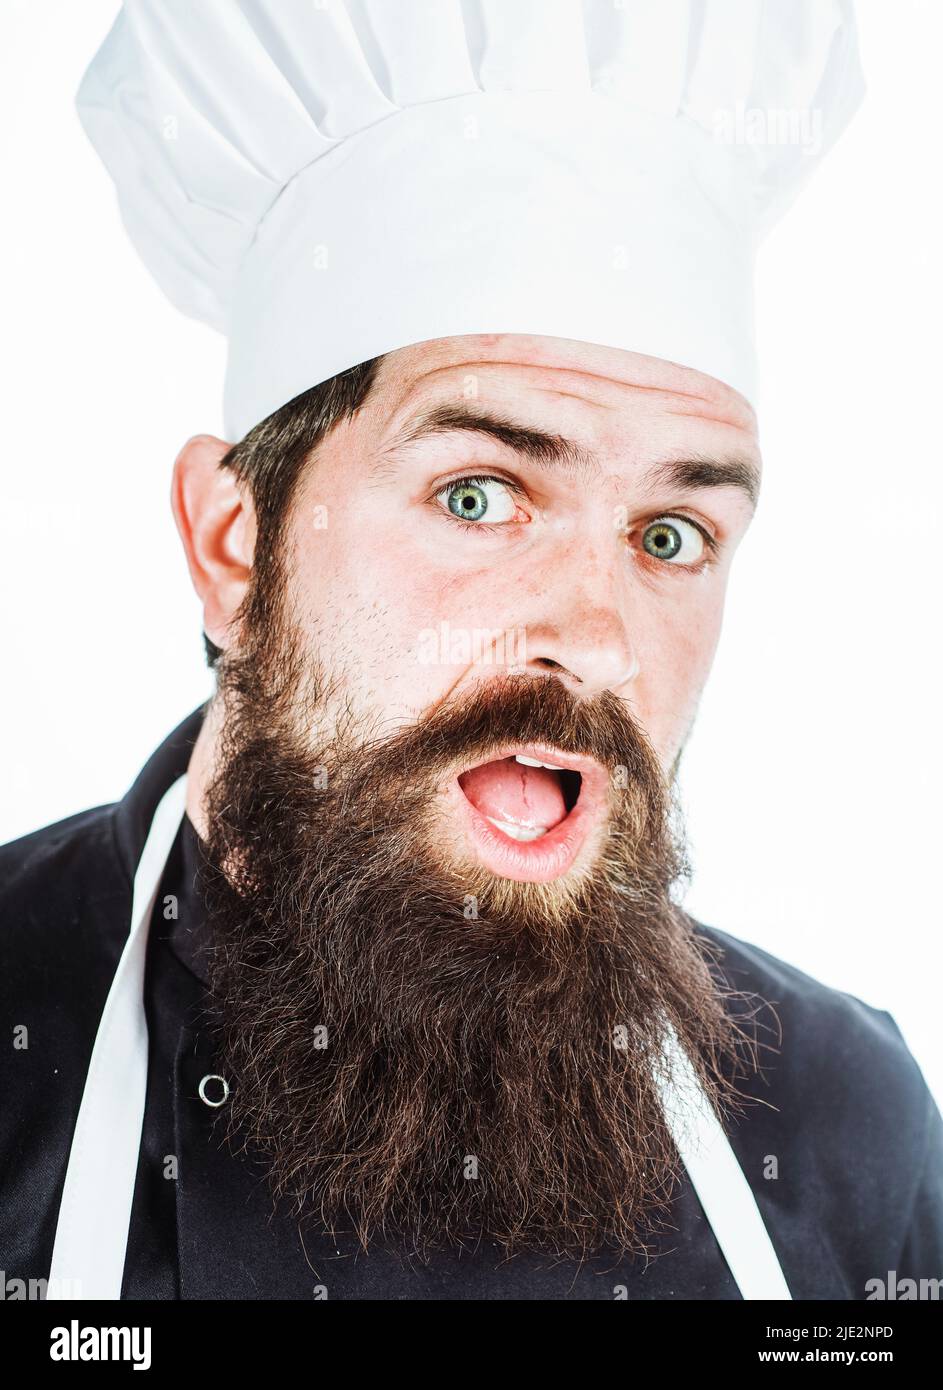 https://c8.alamy.com/comp/2JE2NPD/surprised-bearded-chef-in-uniform-cooking-emotions-portrait-of-professional-male-cook-or-baker-2JE2NPD.jpg